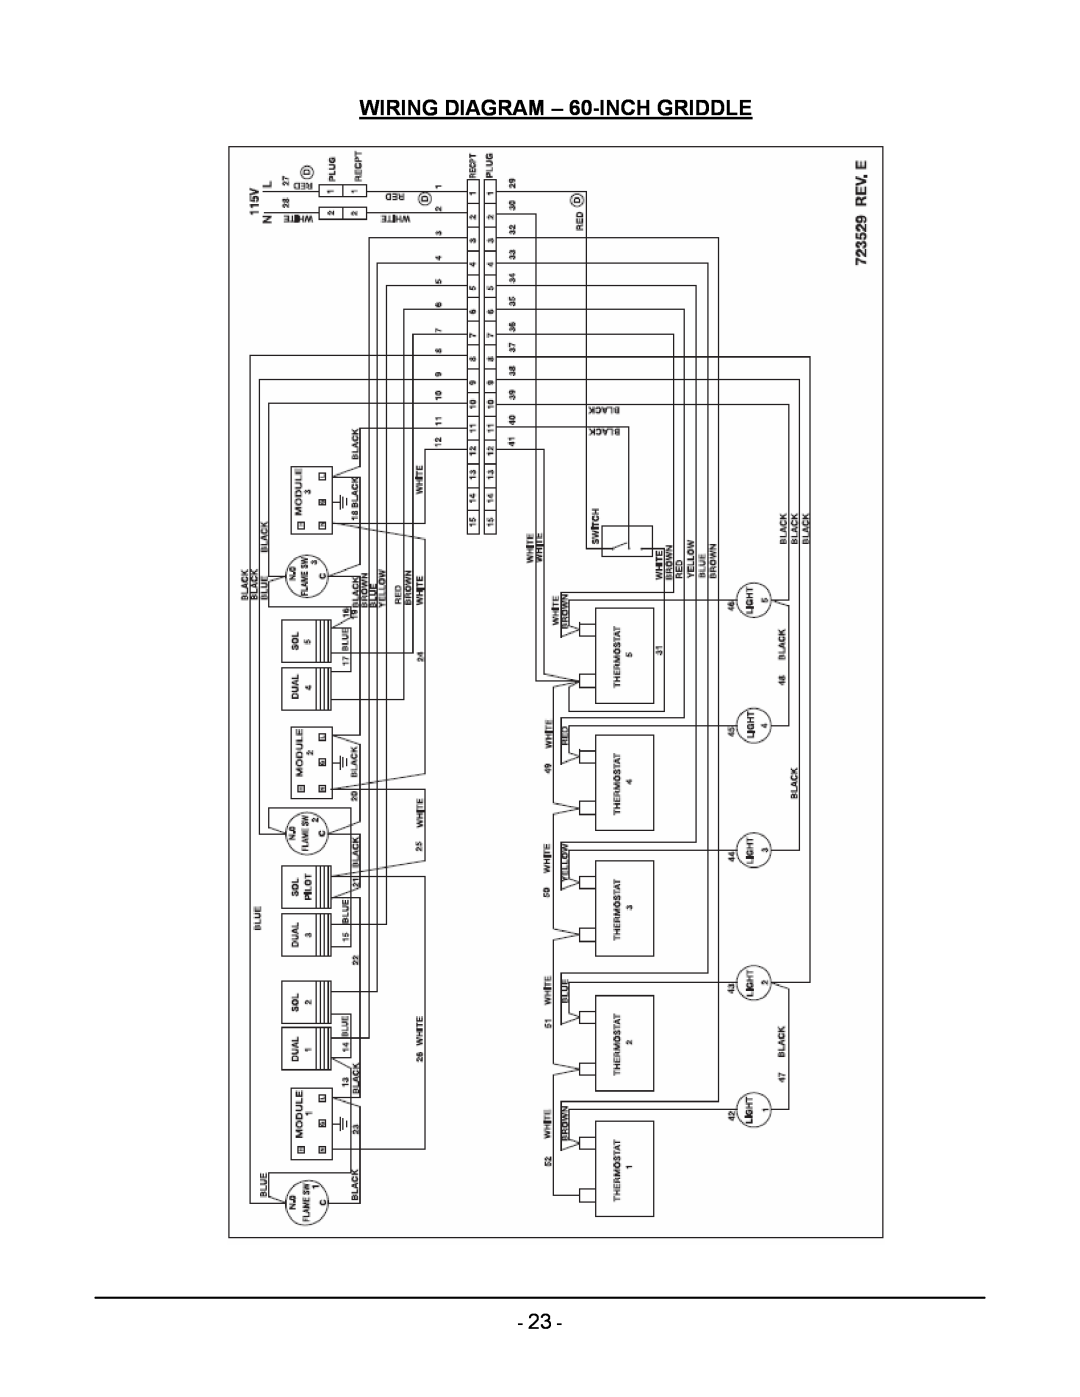 Vulcan-Hart ML-136221-00G24 manual WIRING DIAGRAM - 60-INCH GRIDDLE 